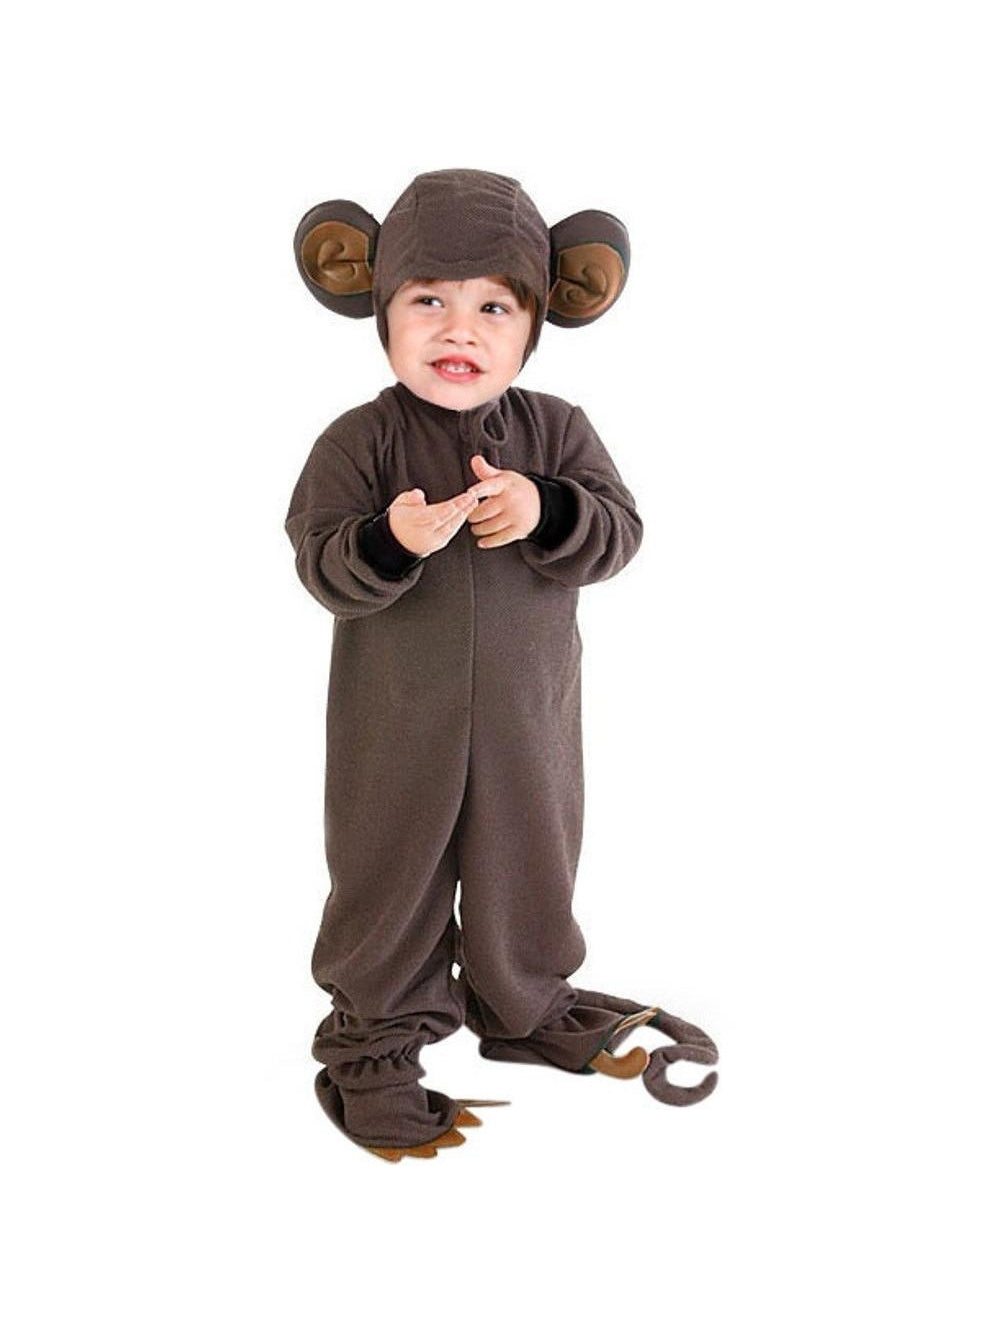 Child Monkey Suit Costume